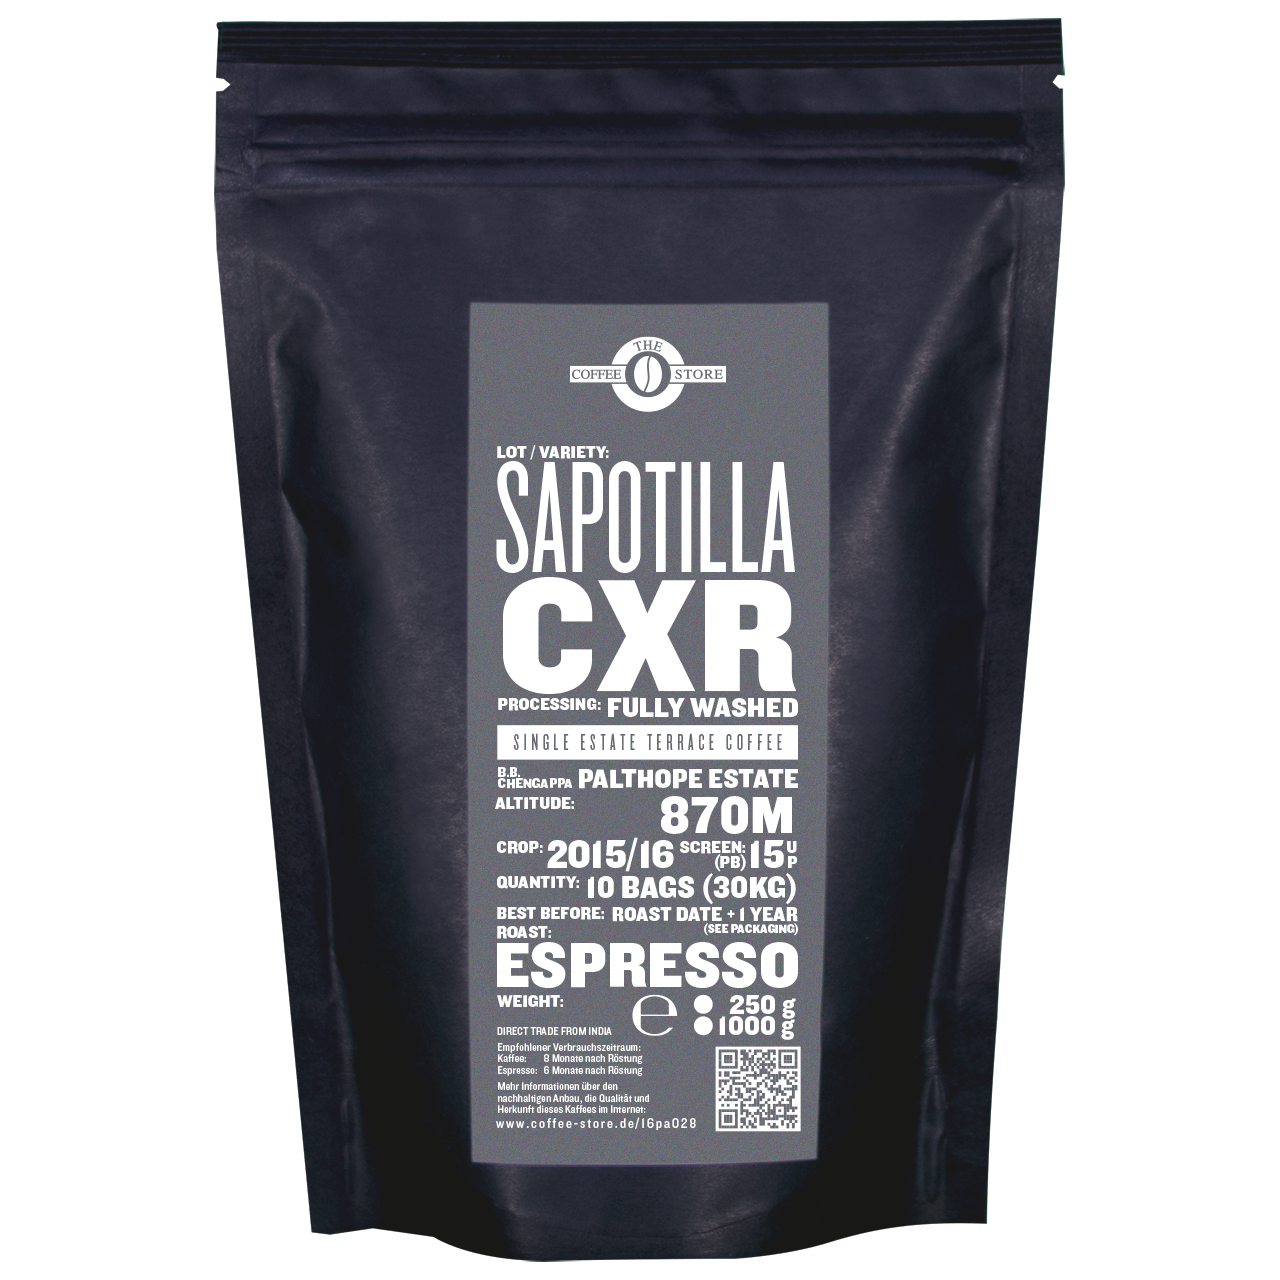 Sapotilla, CxR - Espressoröstung